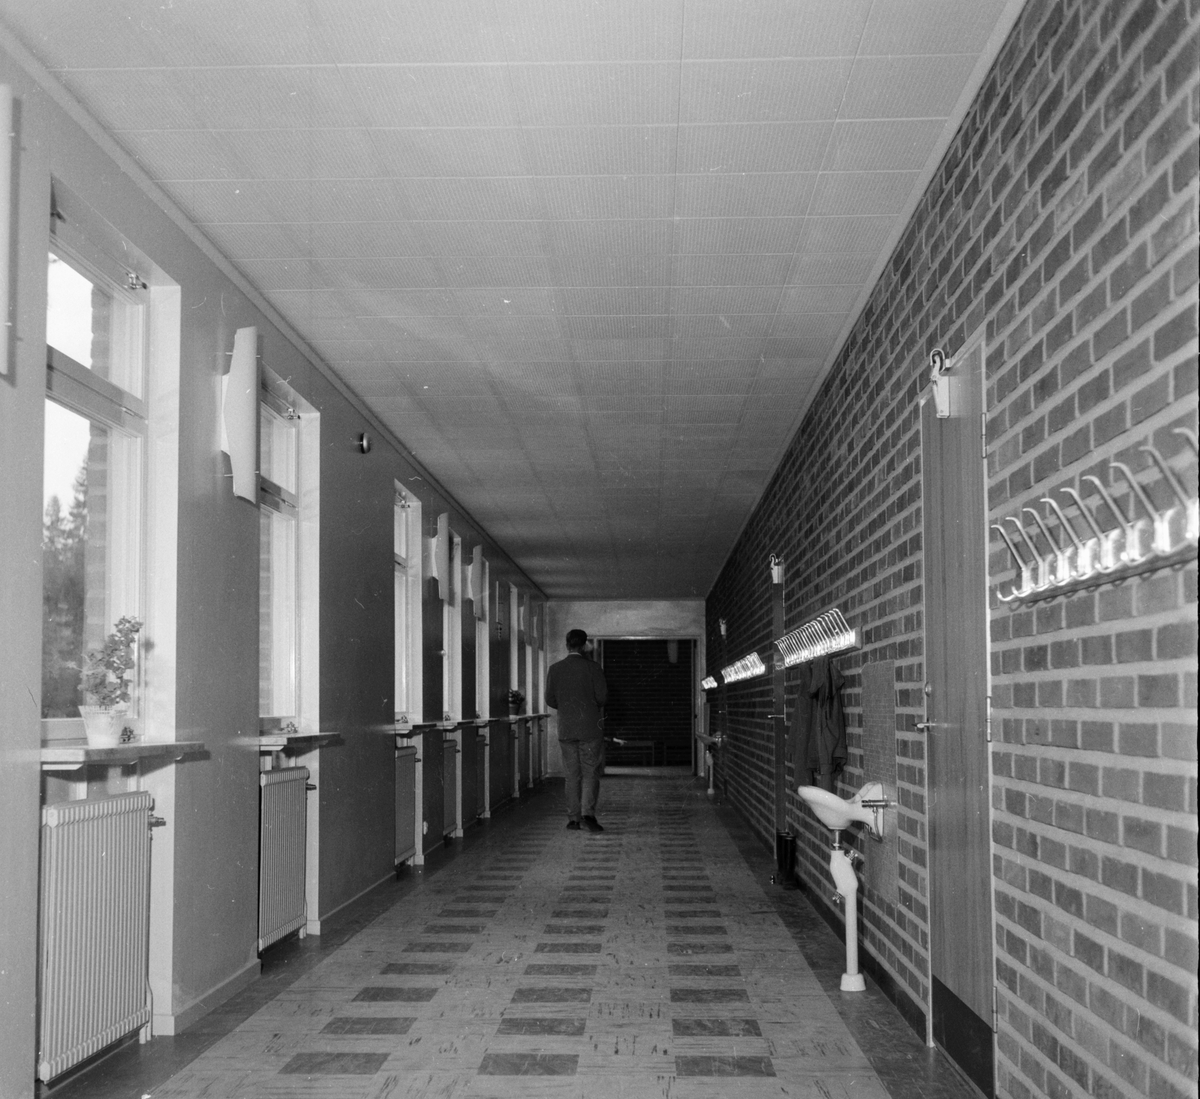 Nya skolan Holmsveden
9/9 1958